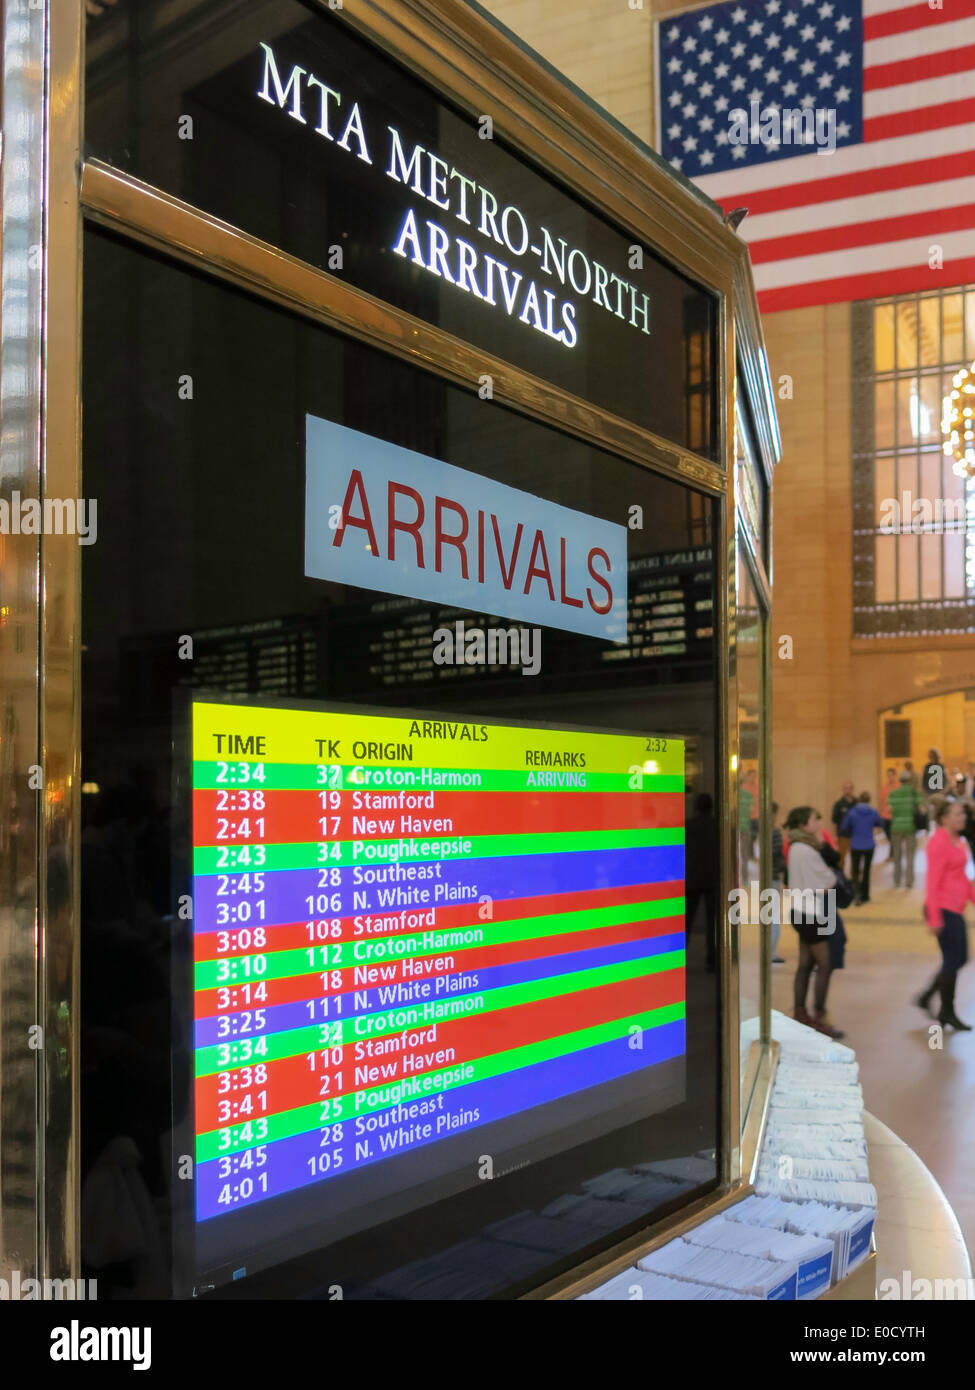 MTA Metro-North Arrival Sign, Main Concourse,Grand Central Terminal, NYC, USA Stock Photo